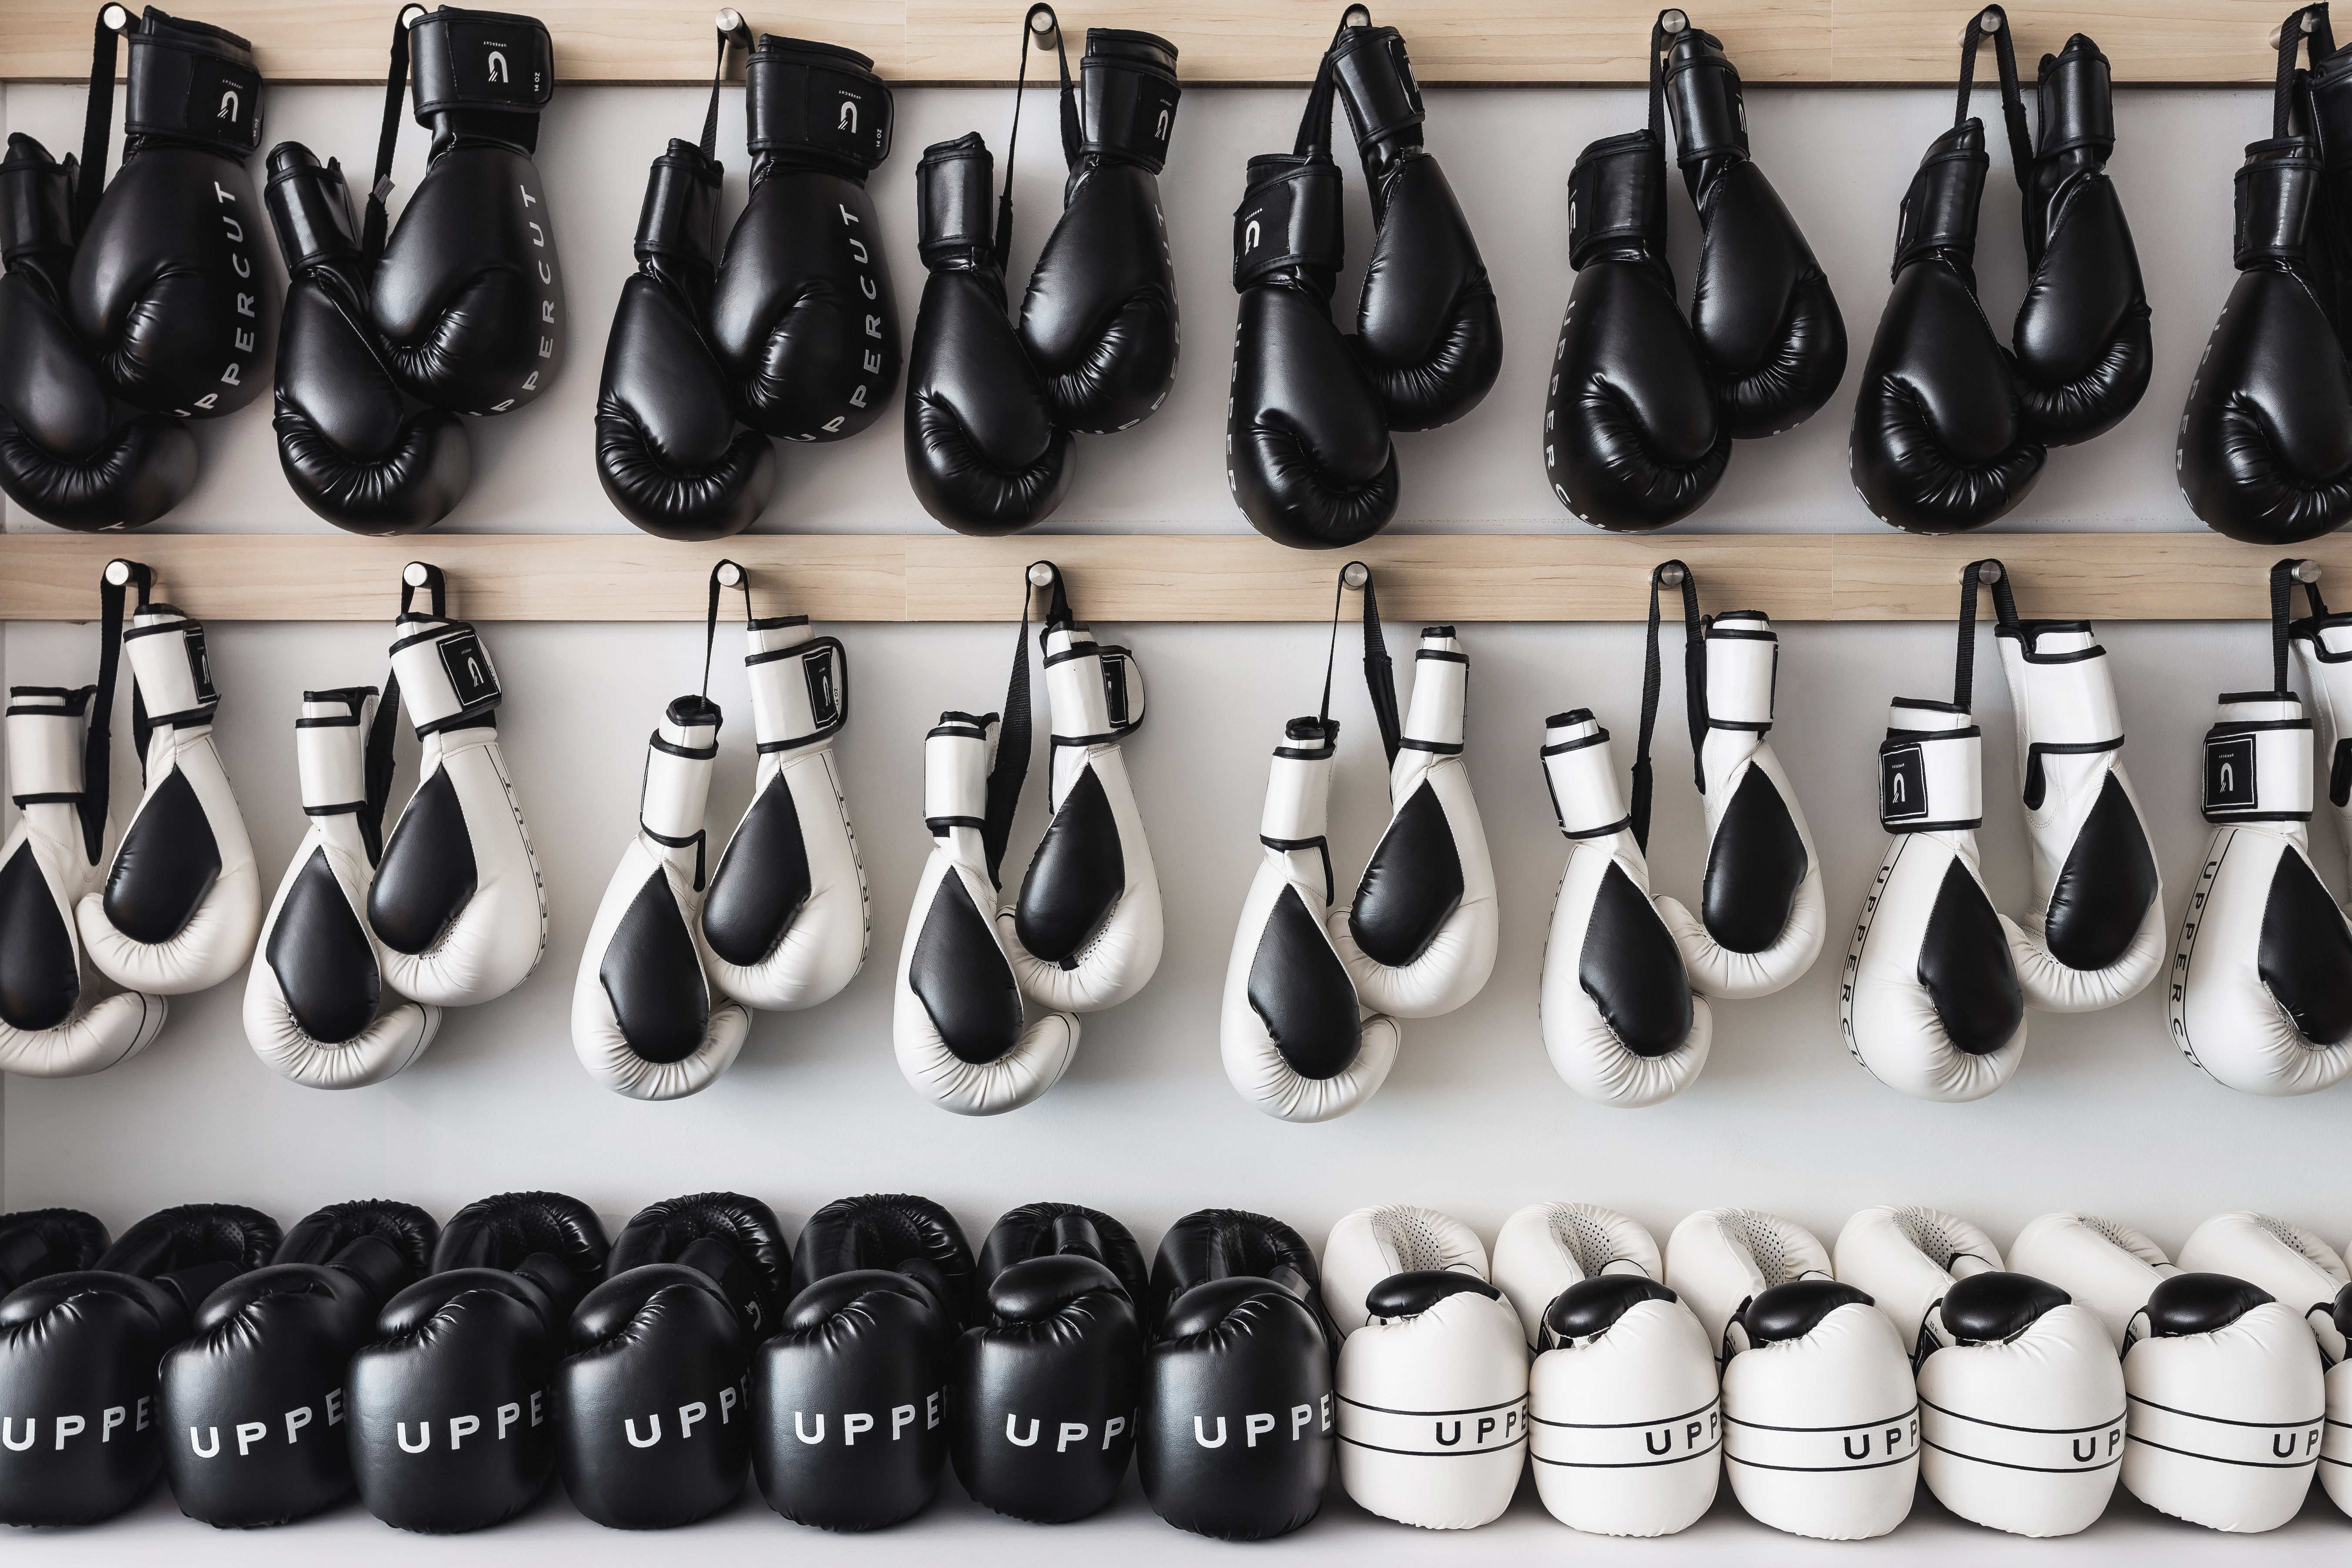 Review: Uppercut is now Telok Ayer’s trendiest boutique boxing gym